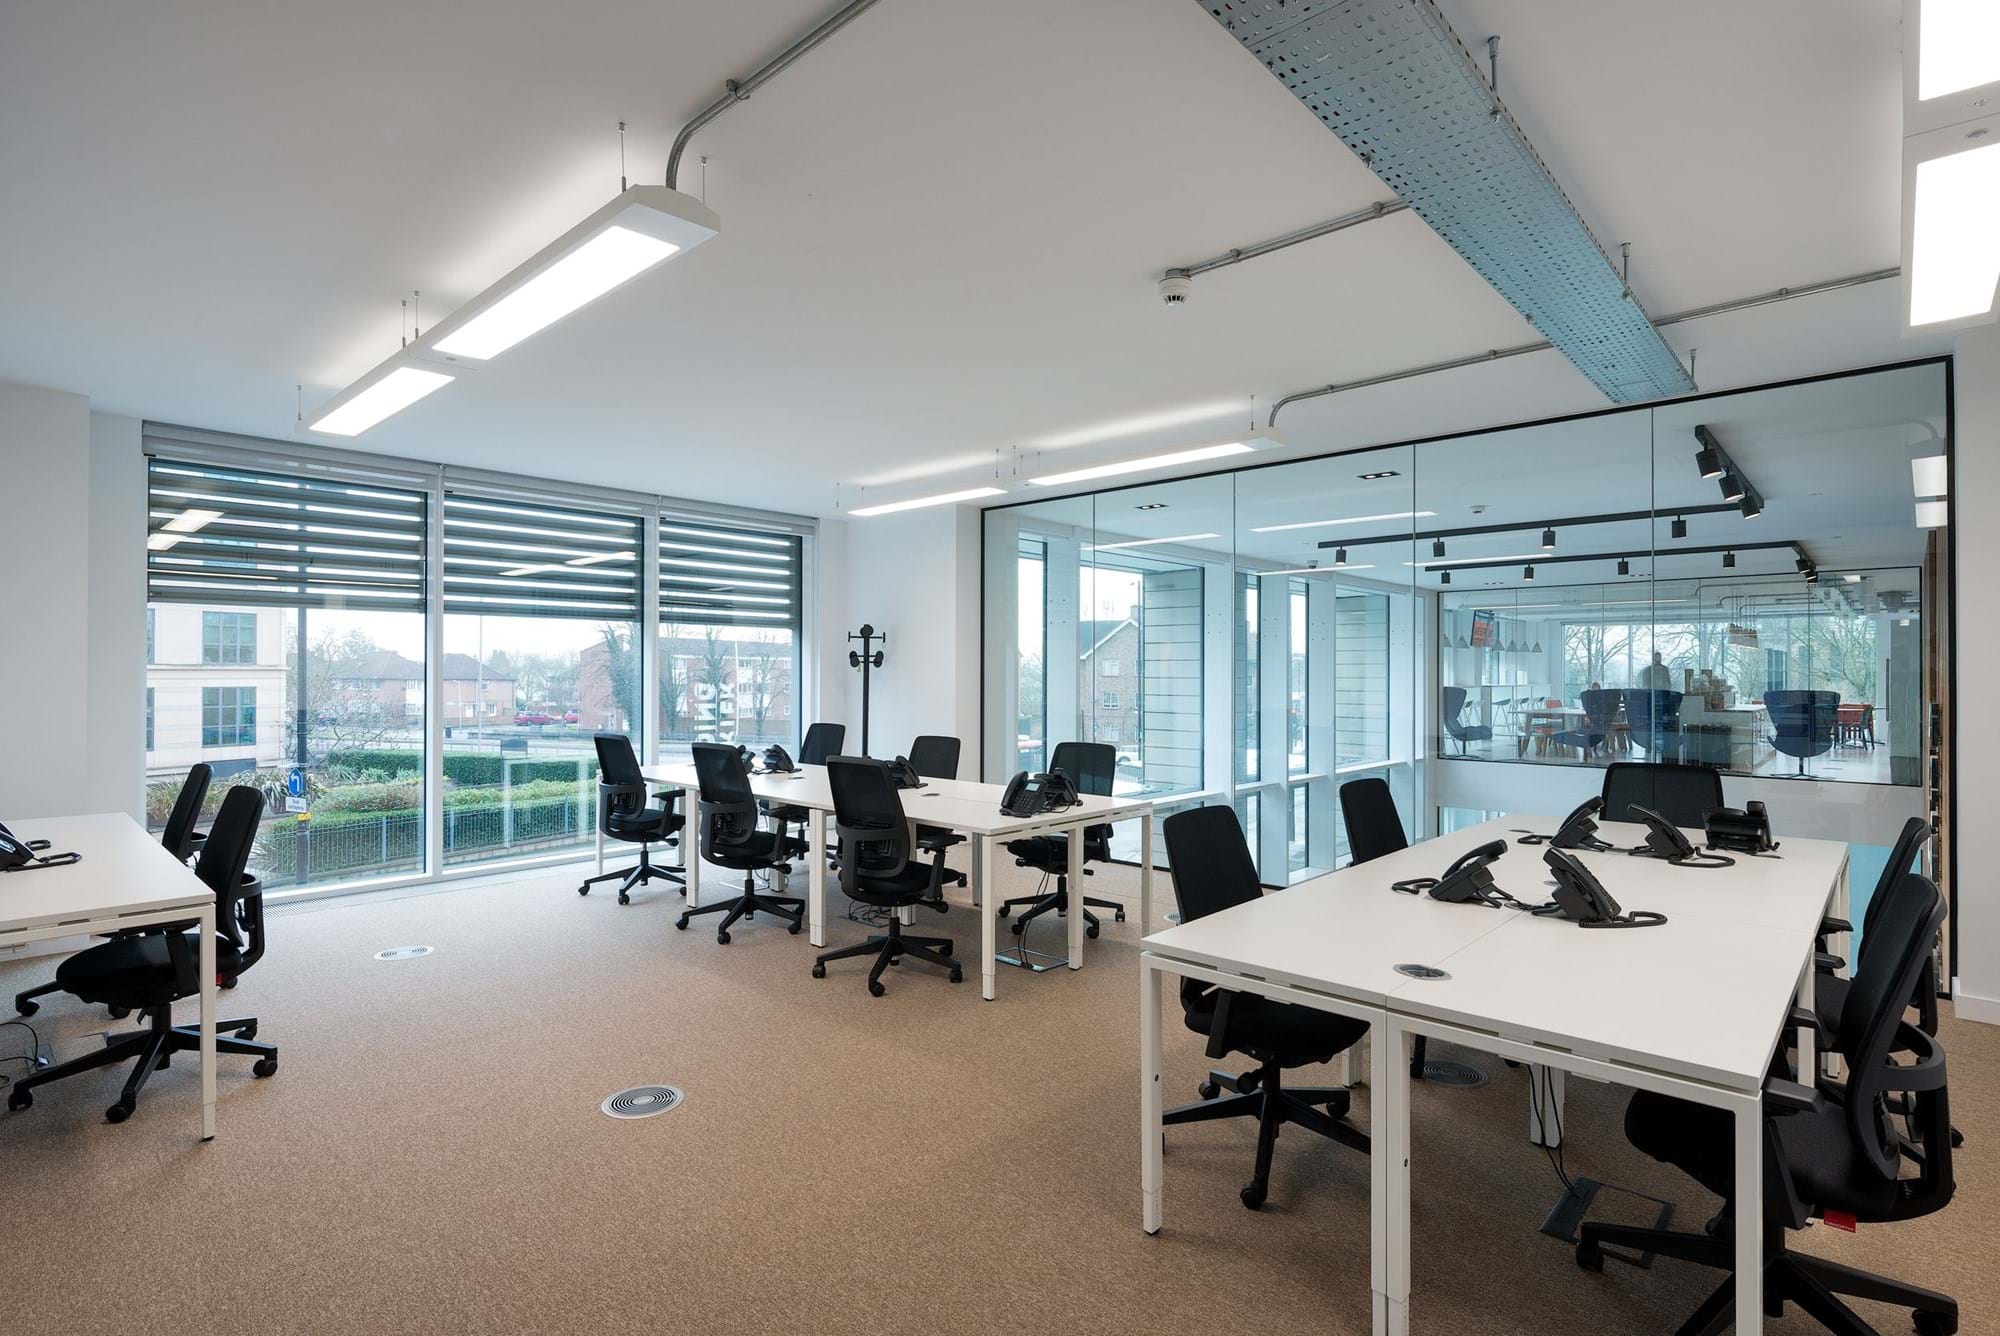 Modus Workspace office design, fit out and refurbishment - Spaces - Uxbridge - Spaces Uxbridge 16 highres sRGB.jpg